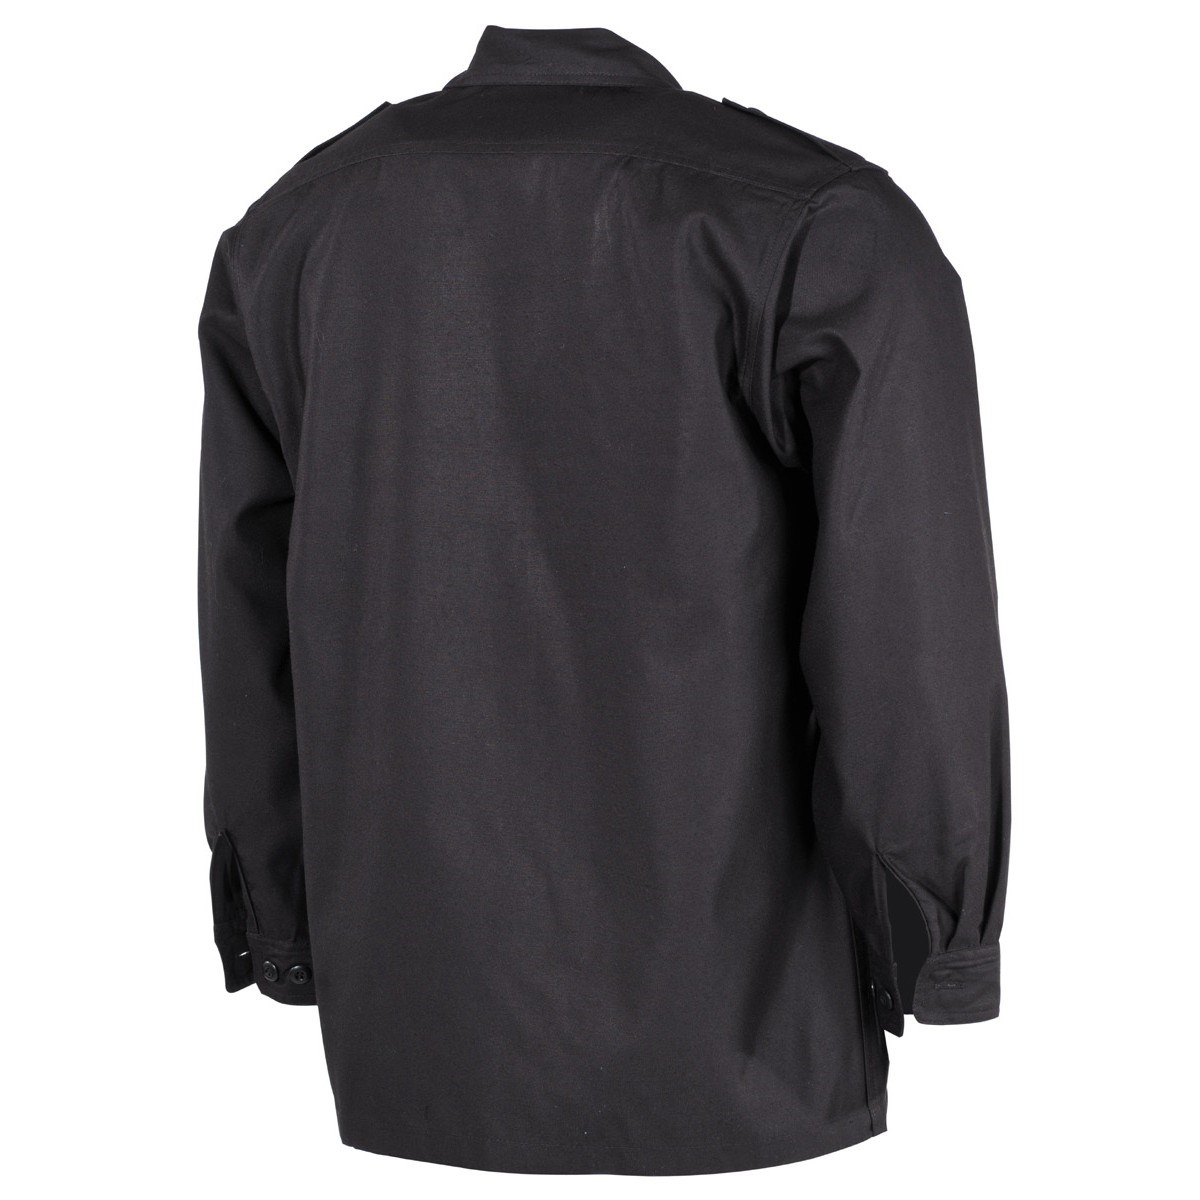 Shirt US long sleeve BLACK MFH int. comp. 02752A L-11